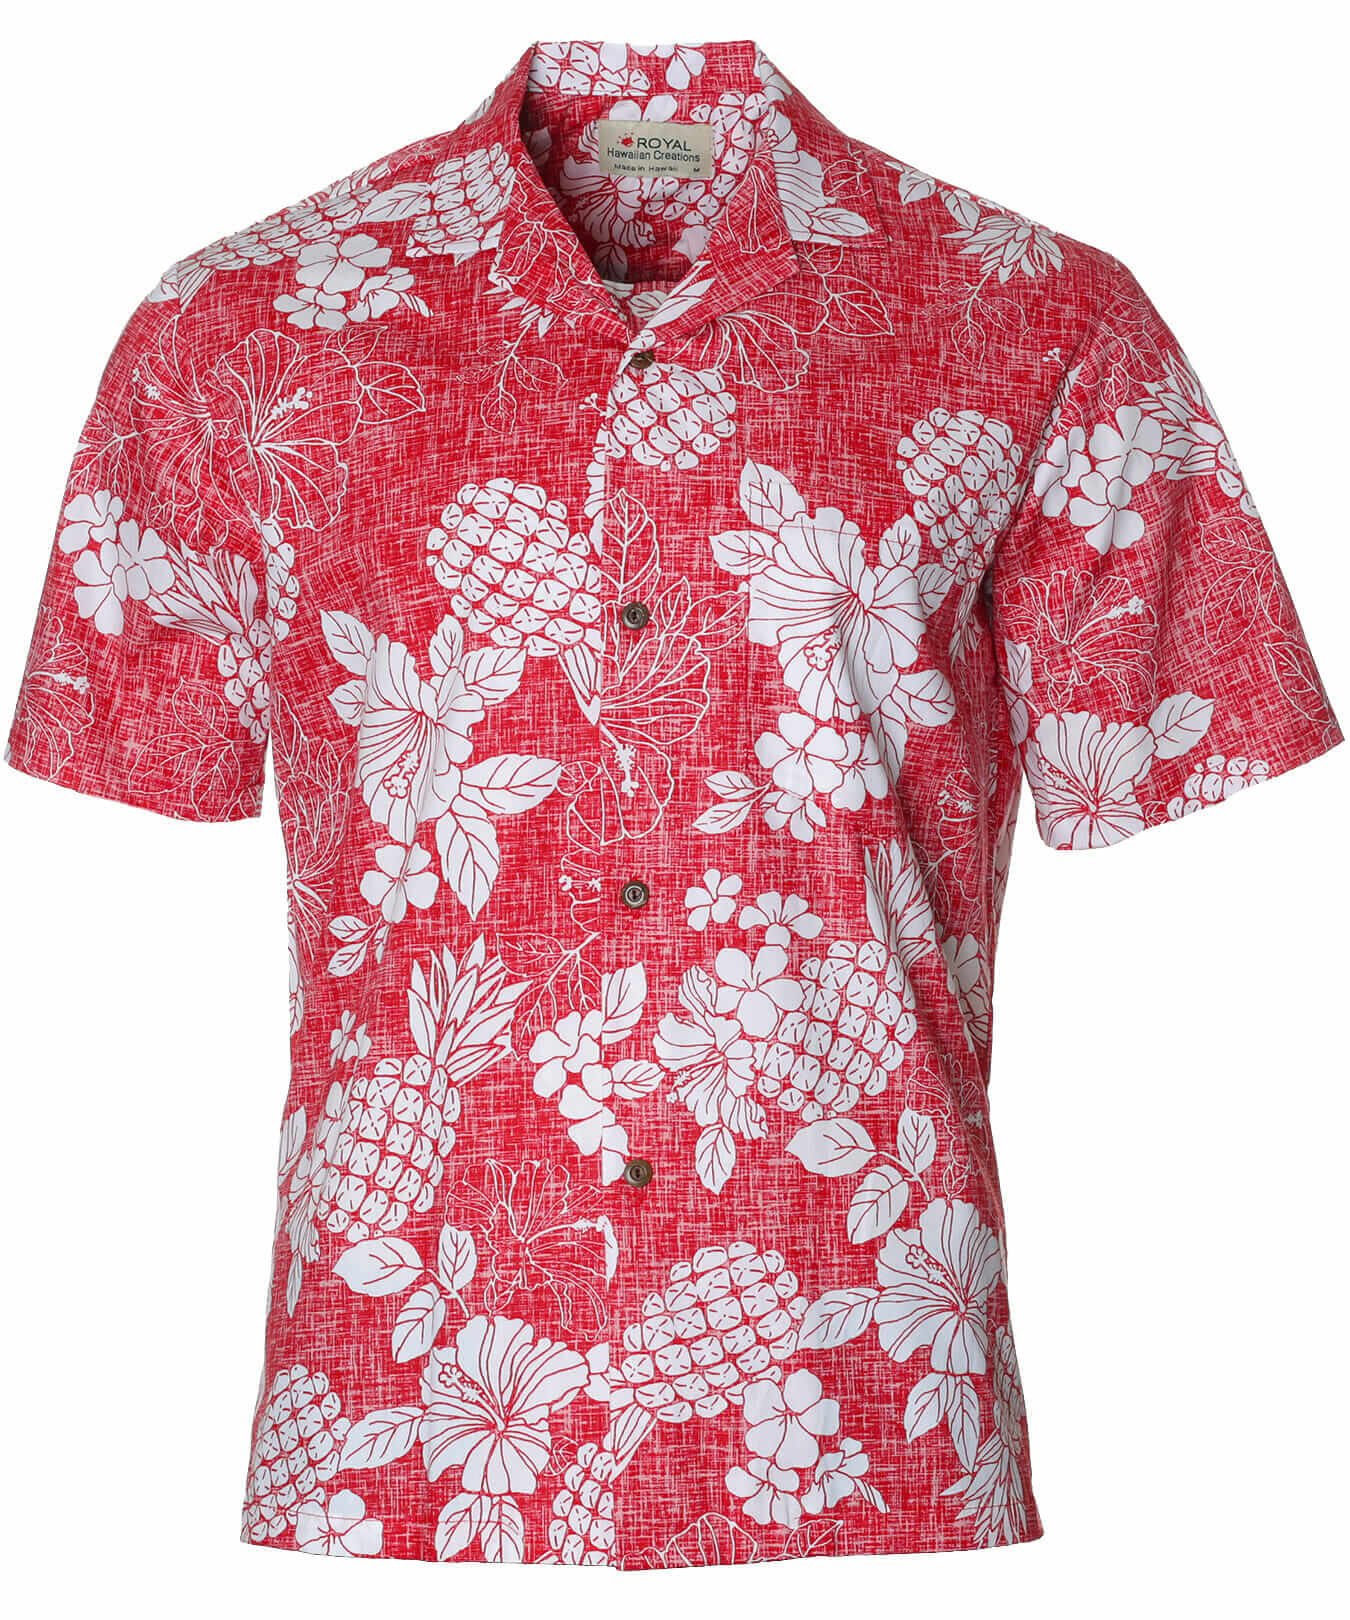 Men Pineapple Cotton Aloha Shirt Red